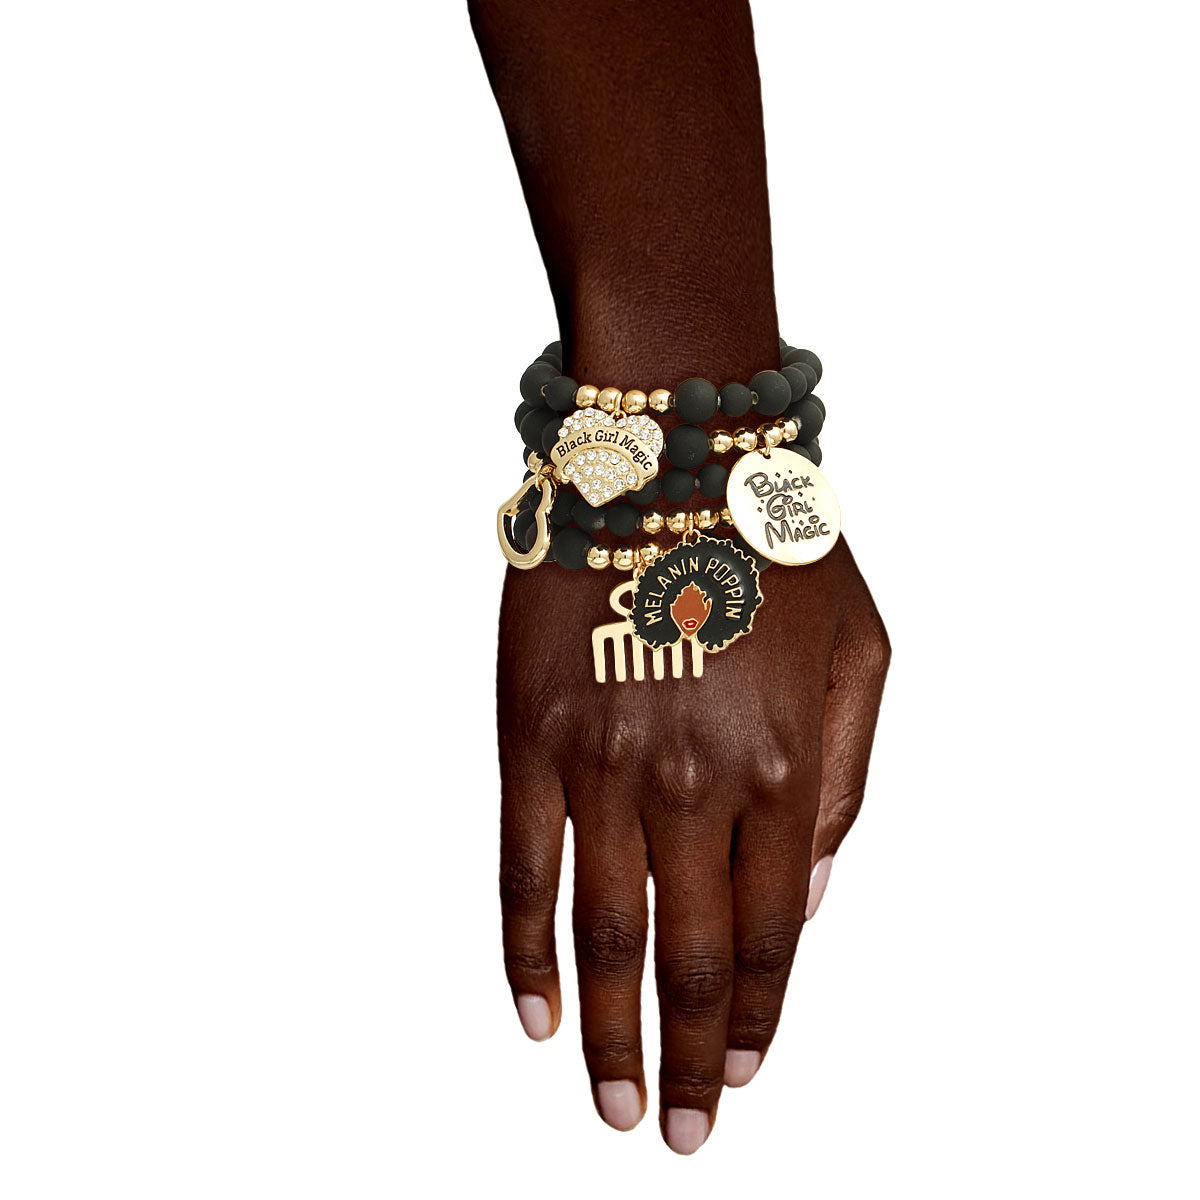 Black Girl Magic Bracelets